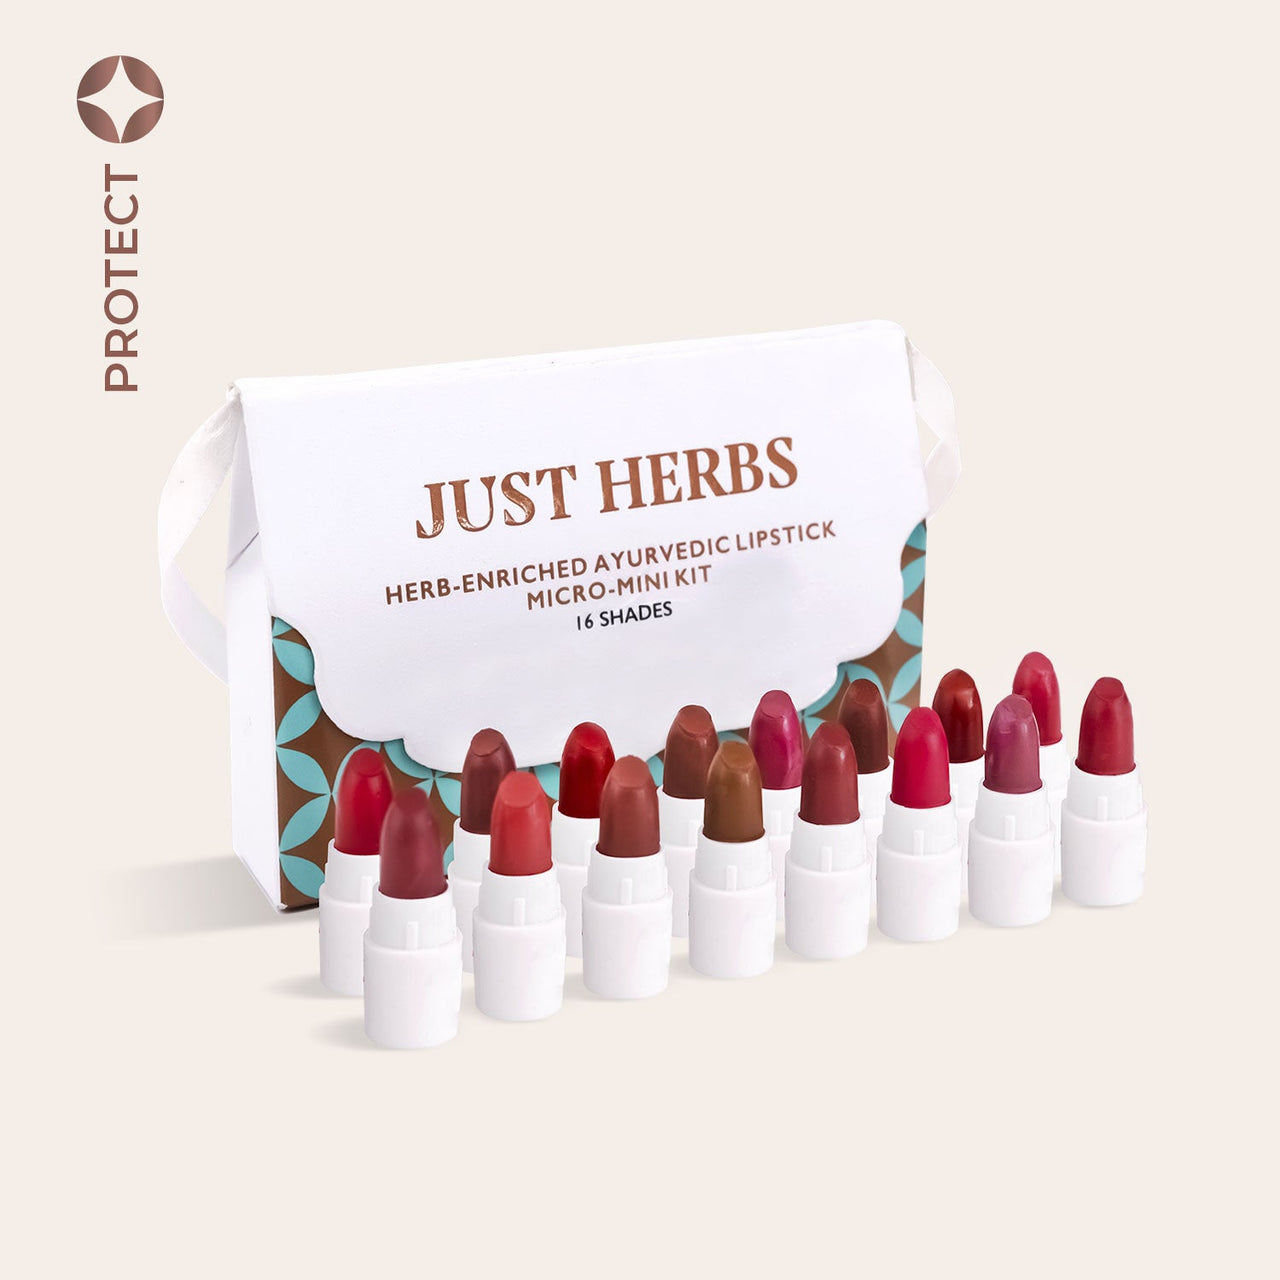 Herb Enriched Ayurvedic Lipstick Micro-Mini Kit - 16 shades